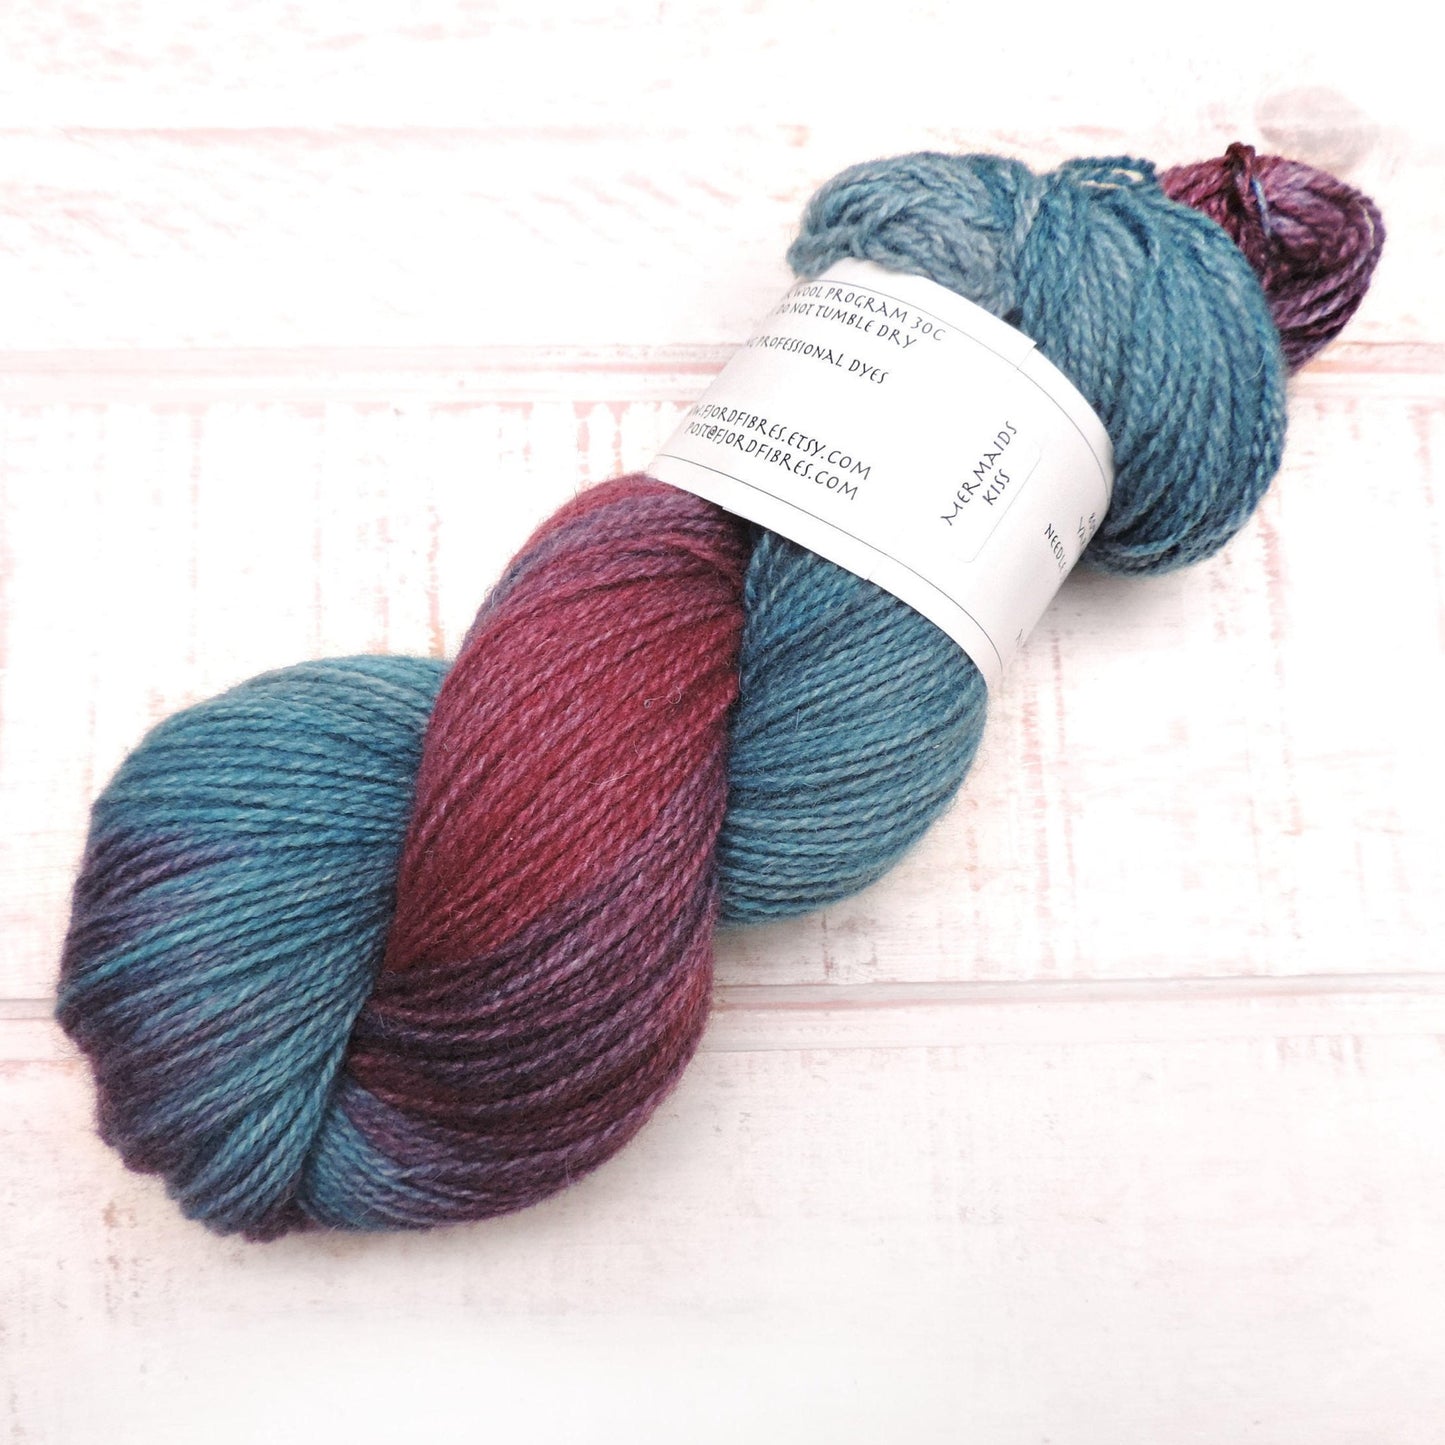 Mermaids Kiss - Trollfjord Sock -  Variegated Yarn - Hand dyed yarn